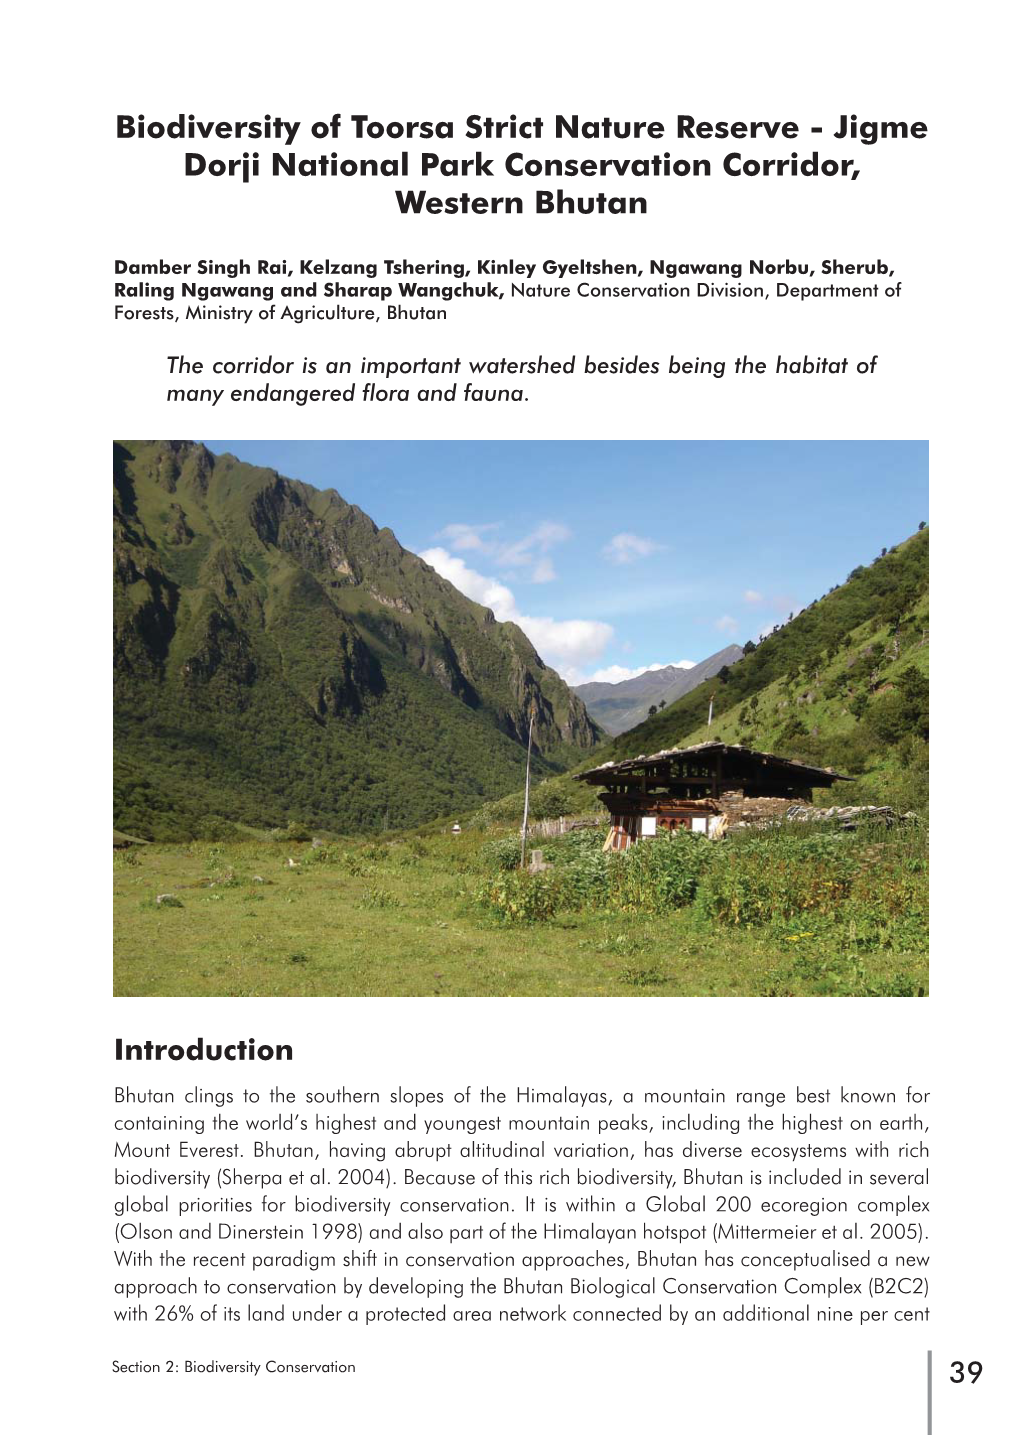 Biodiversity Conservation in the Kangchenjunga Landscape Final.Indd